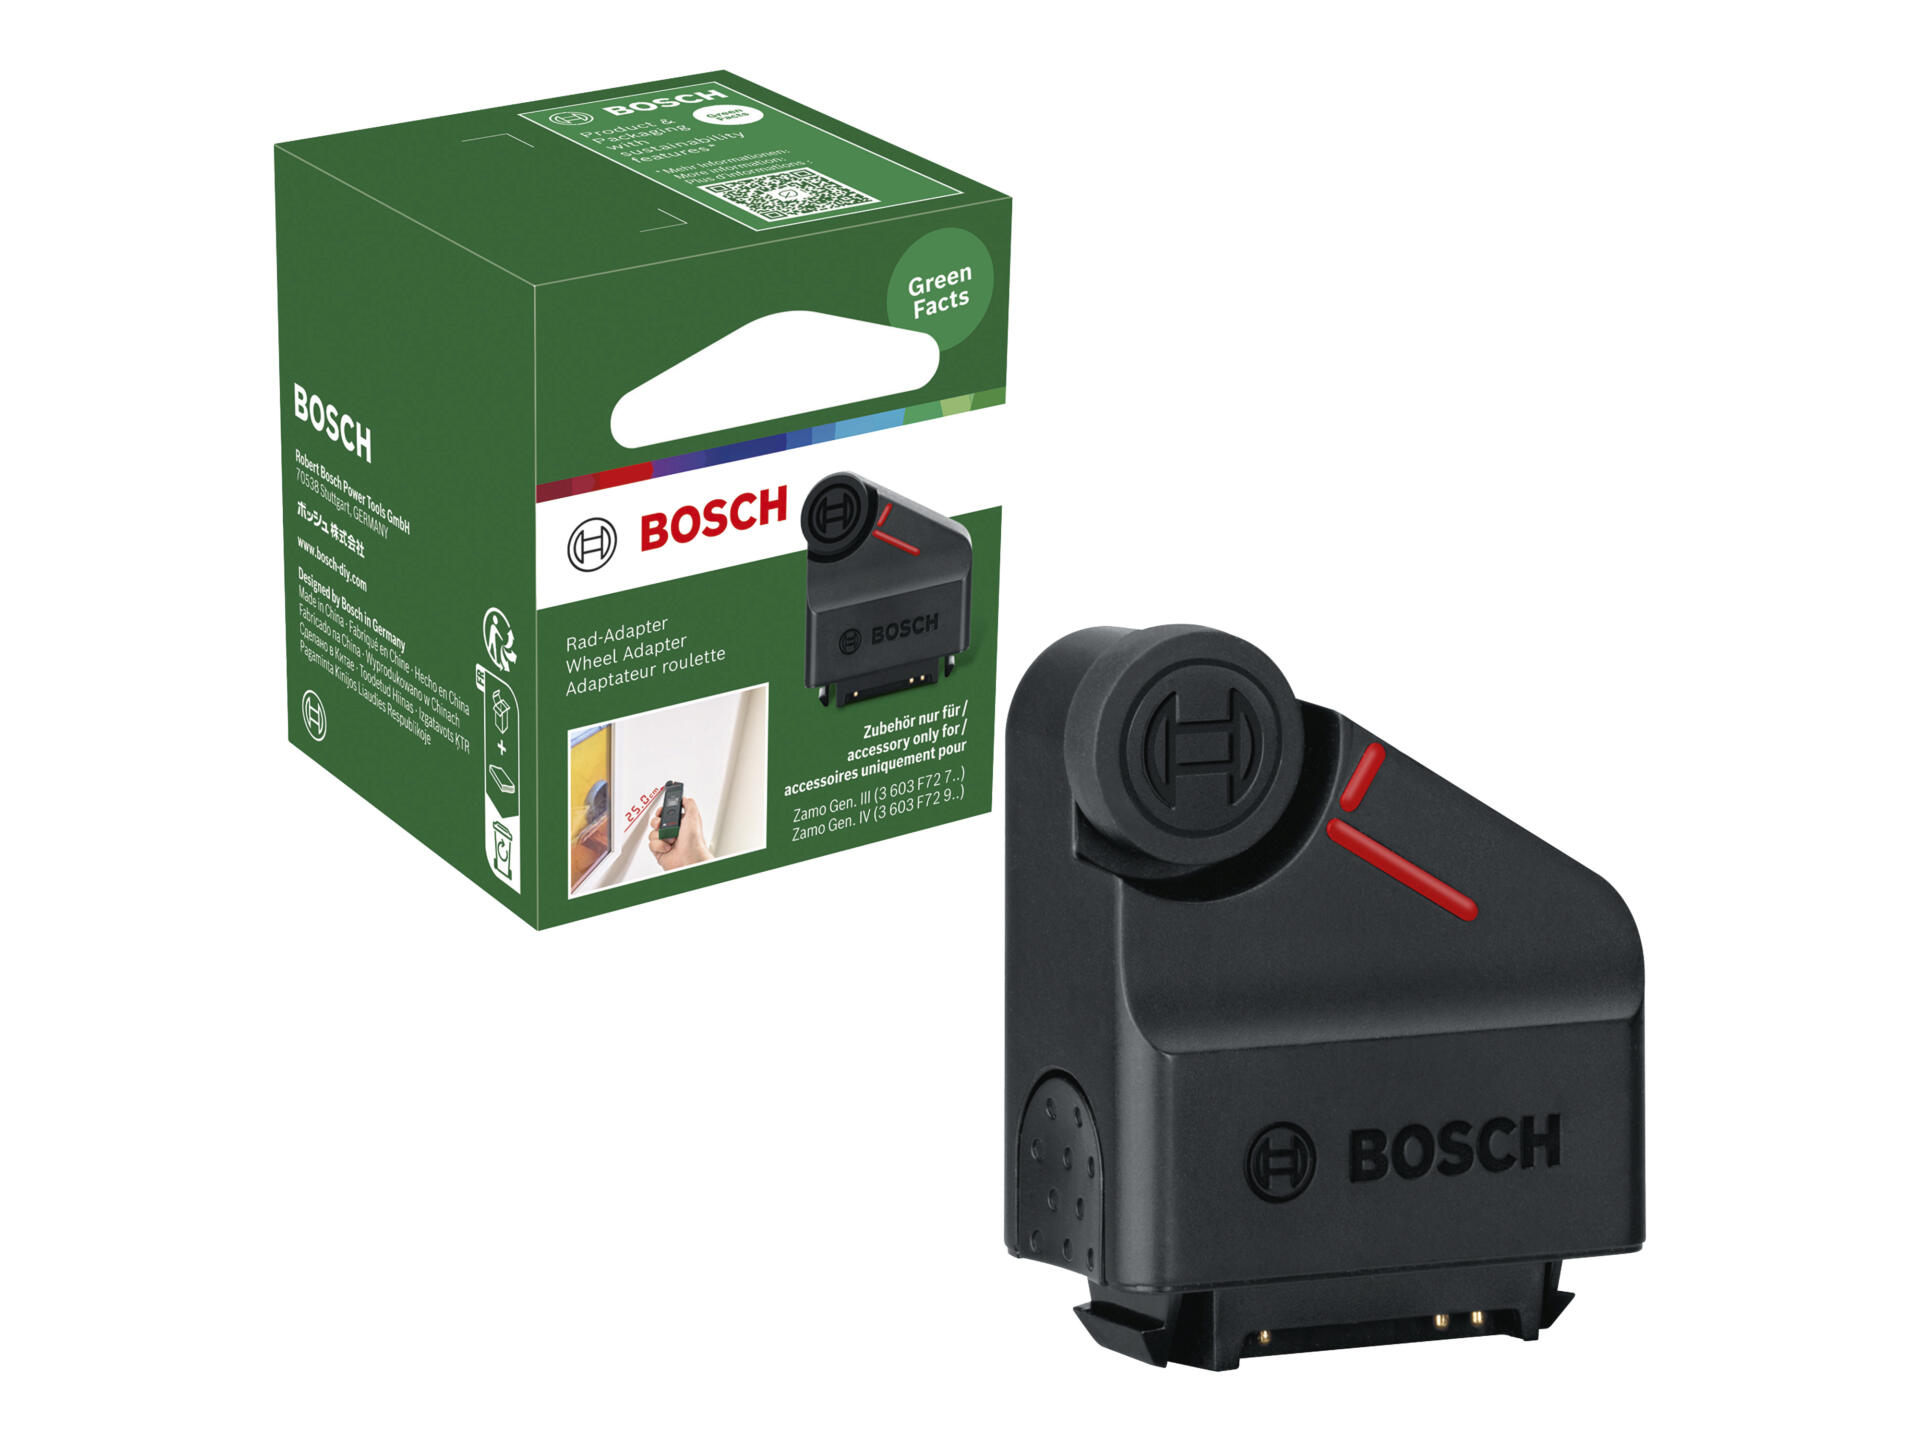 Bosch adapteur roulette Zamo télémètre laser